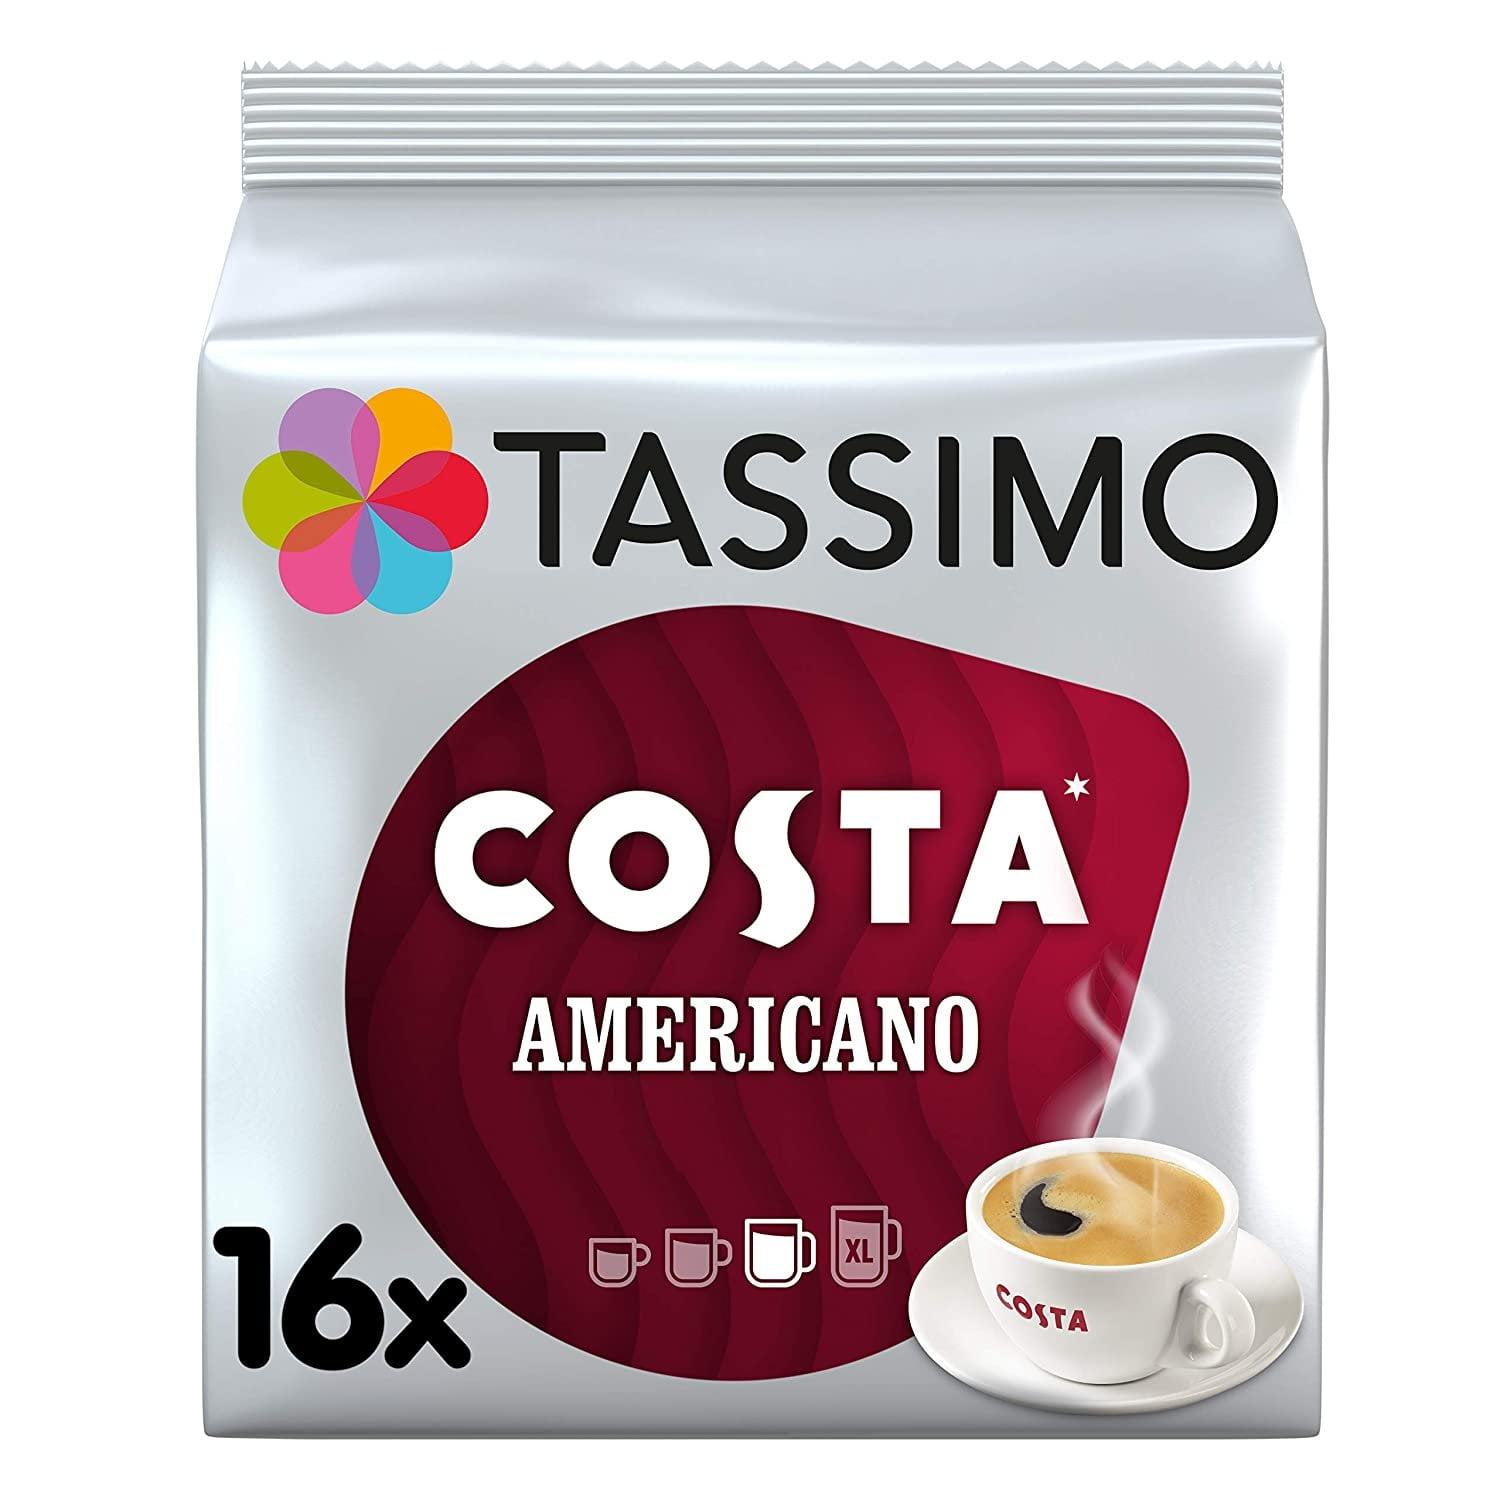 Online - Capsule caffè miste Illy Iperespresso - Coffee Matic Shop